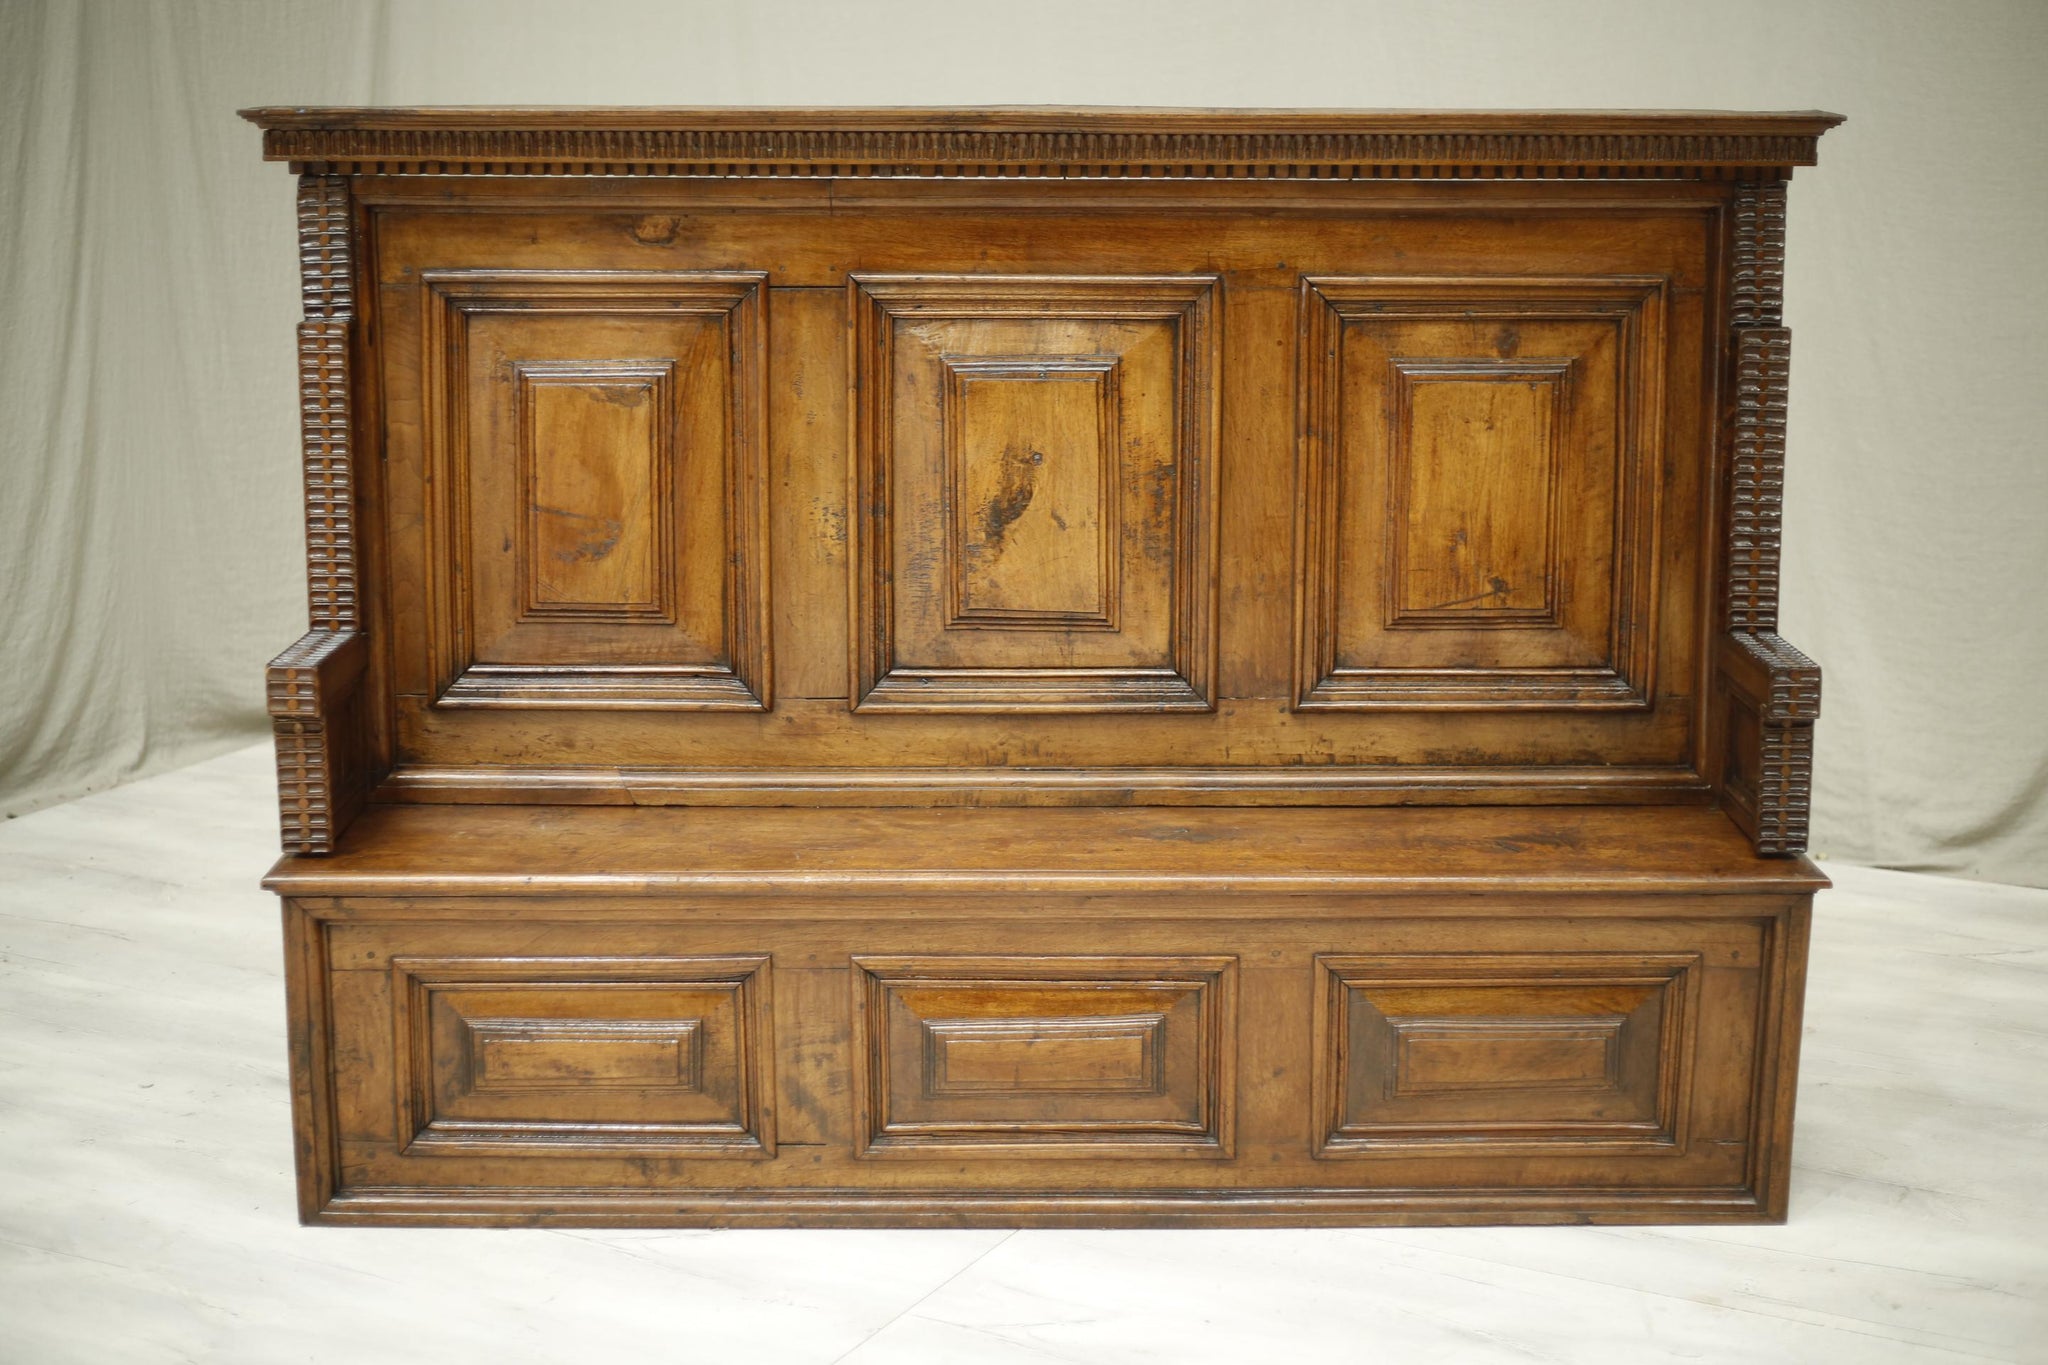 Antique 19th century Italian panelled hall bench